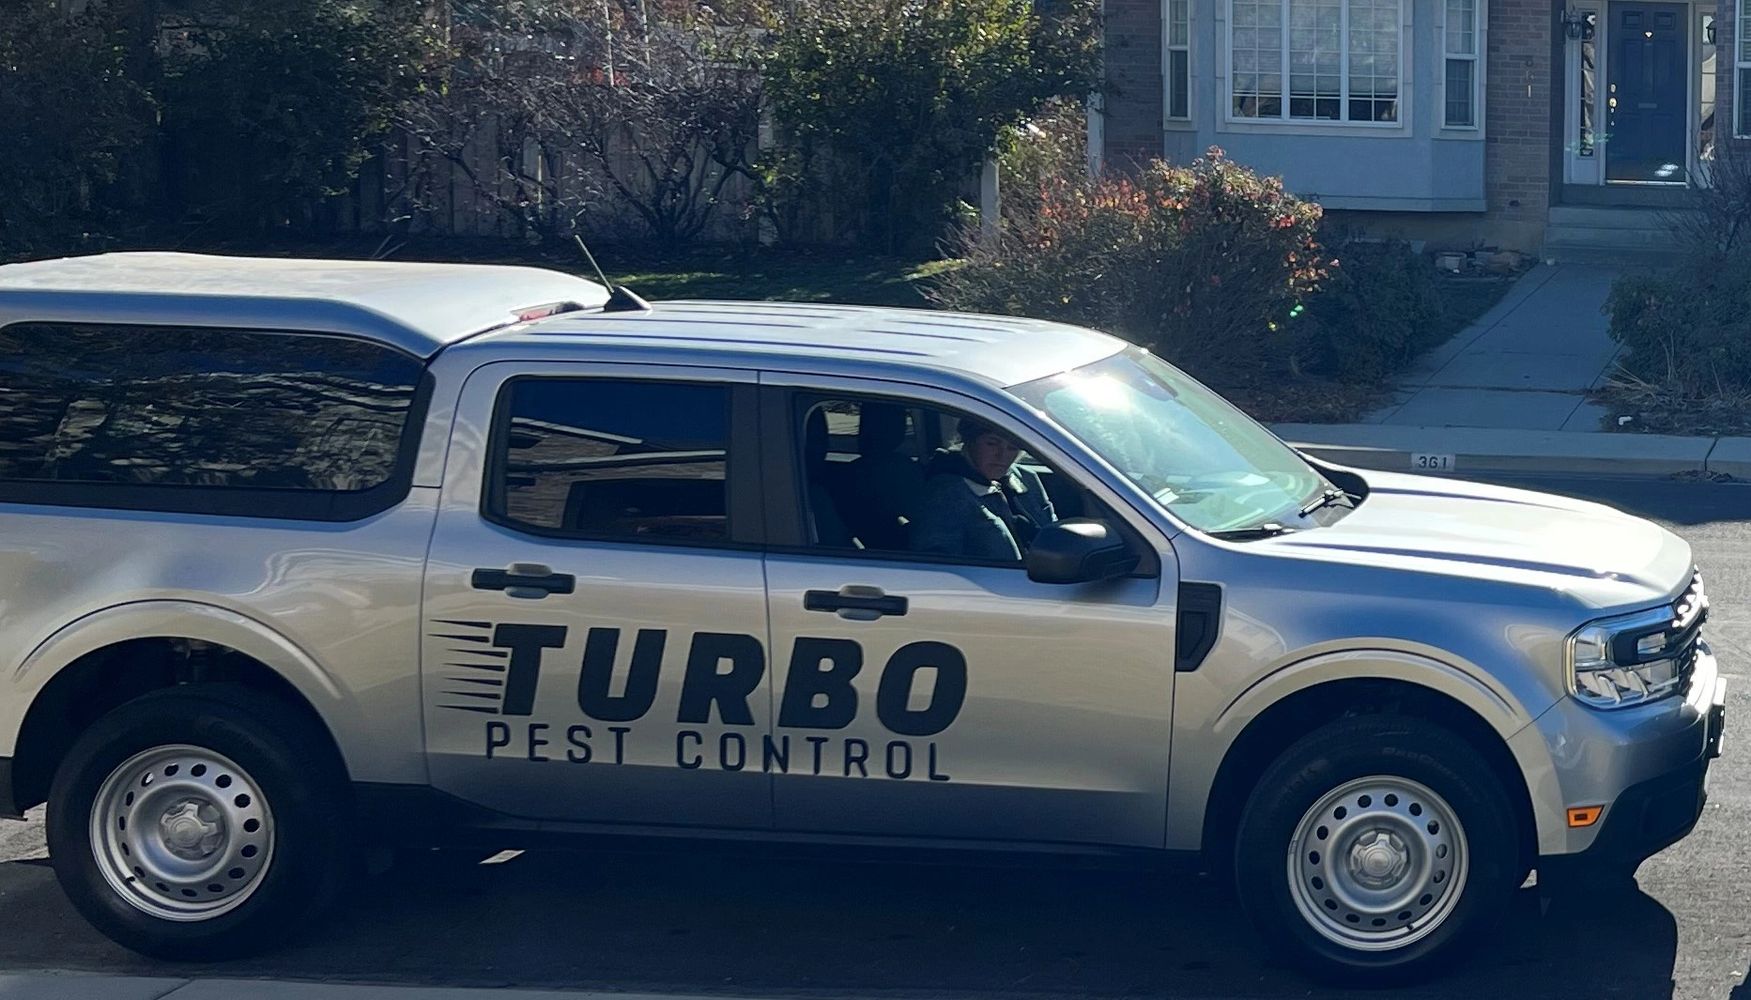 Turbo service truck